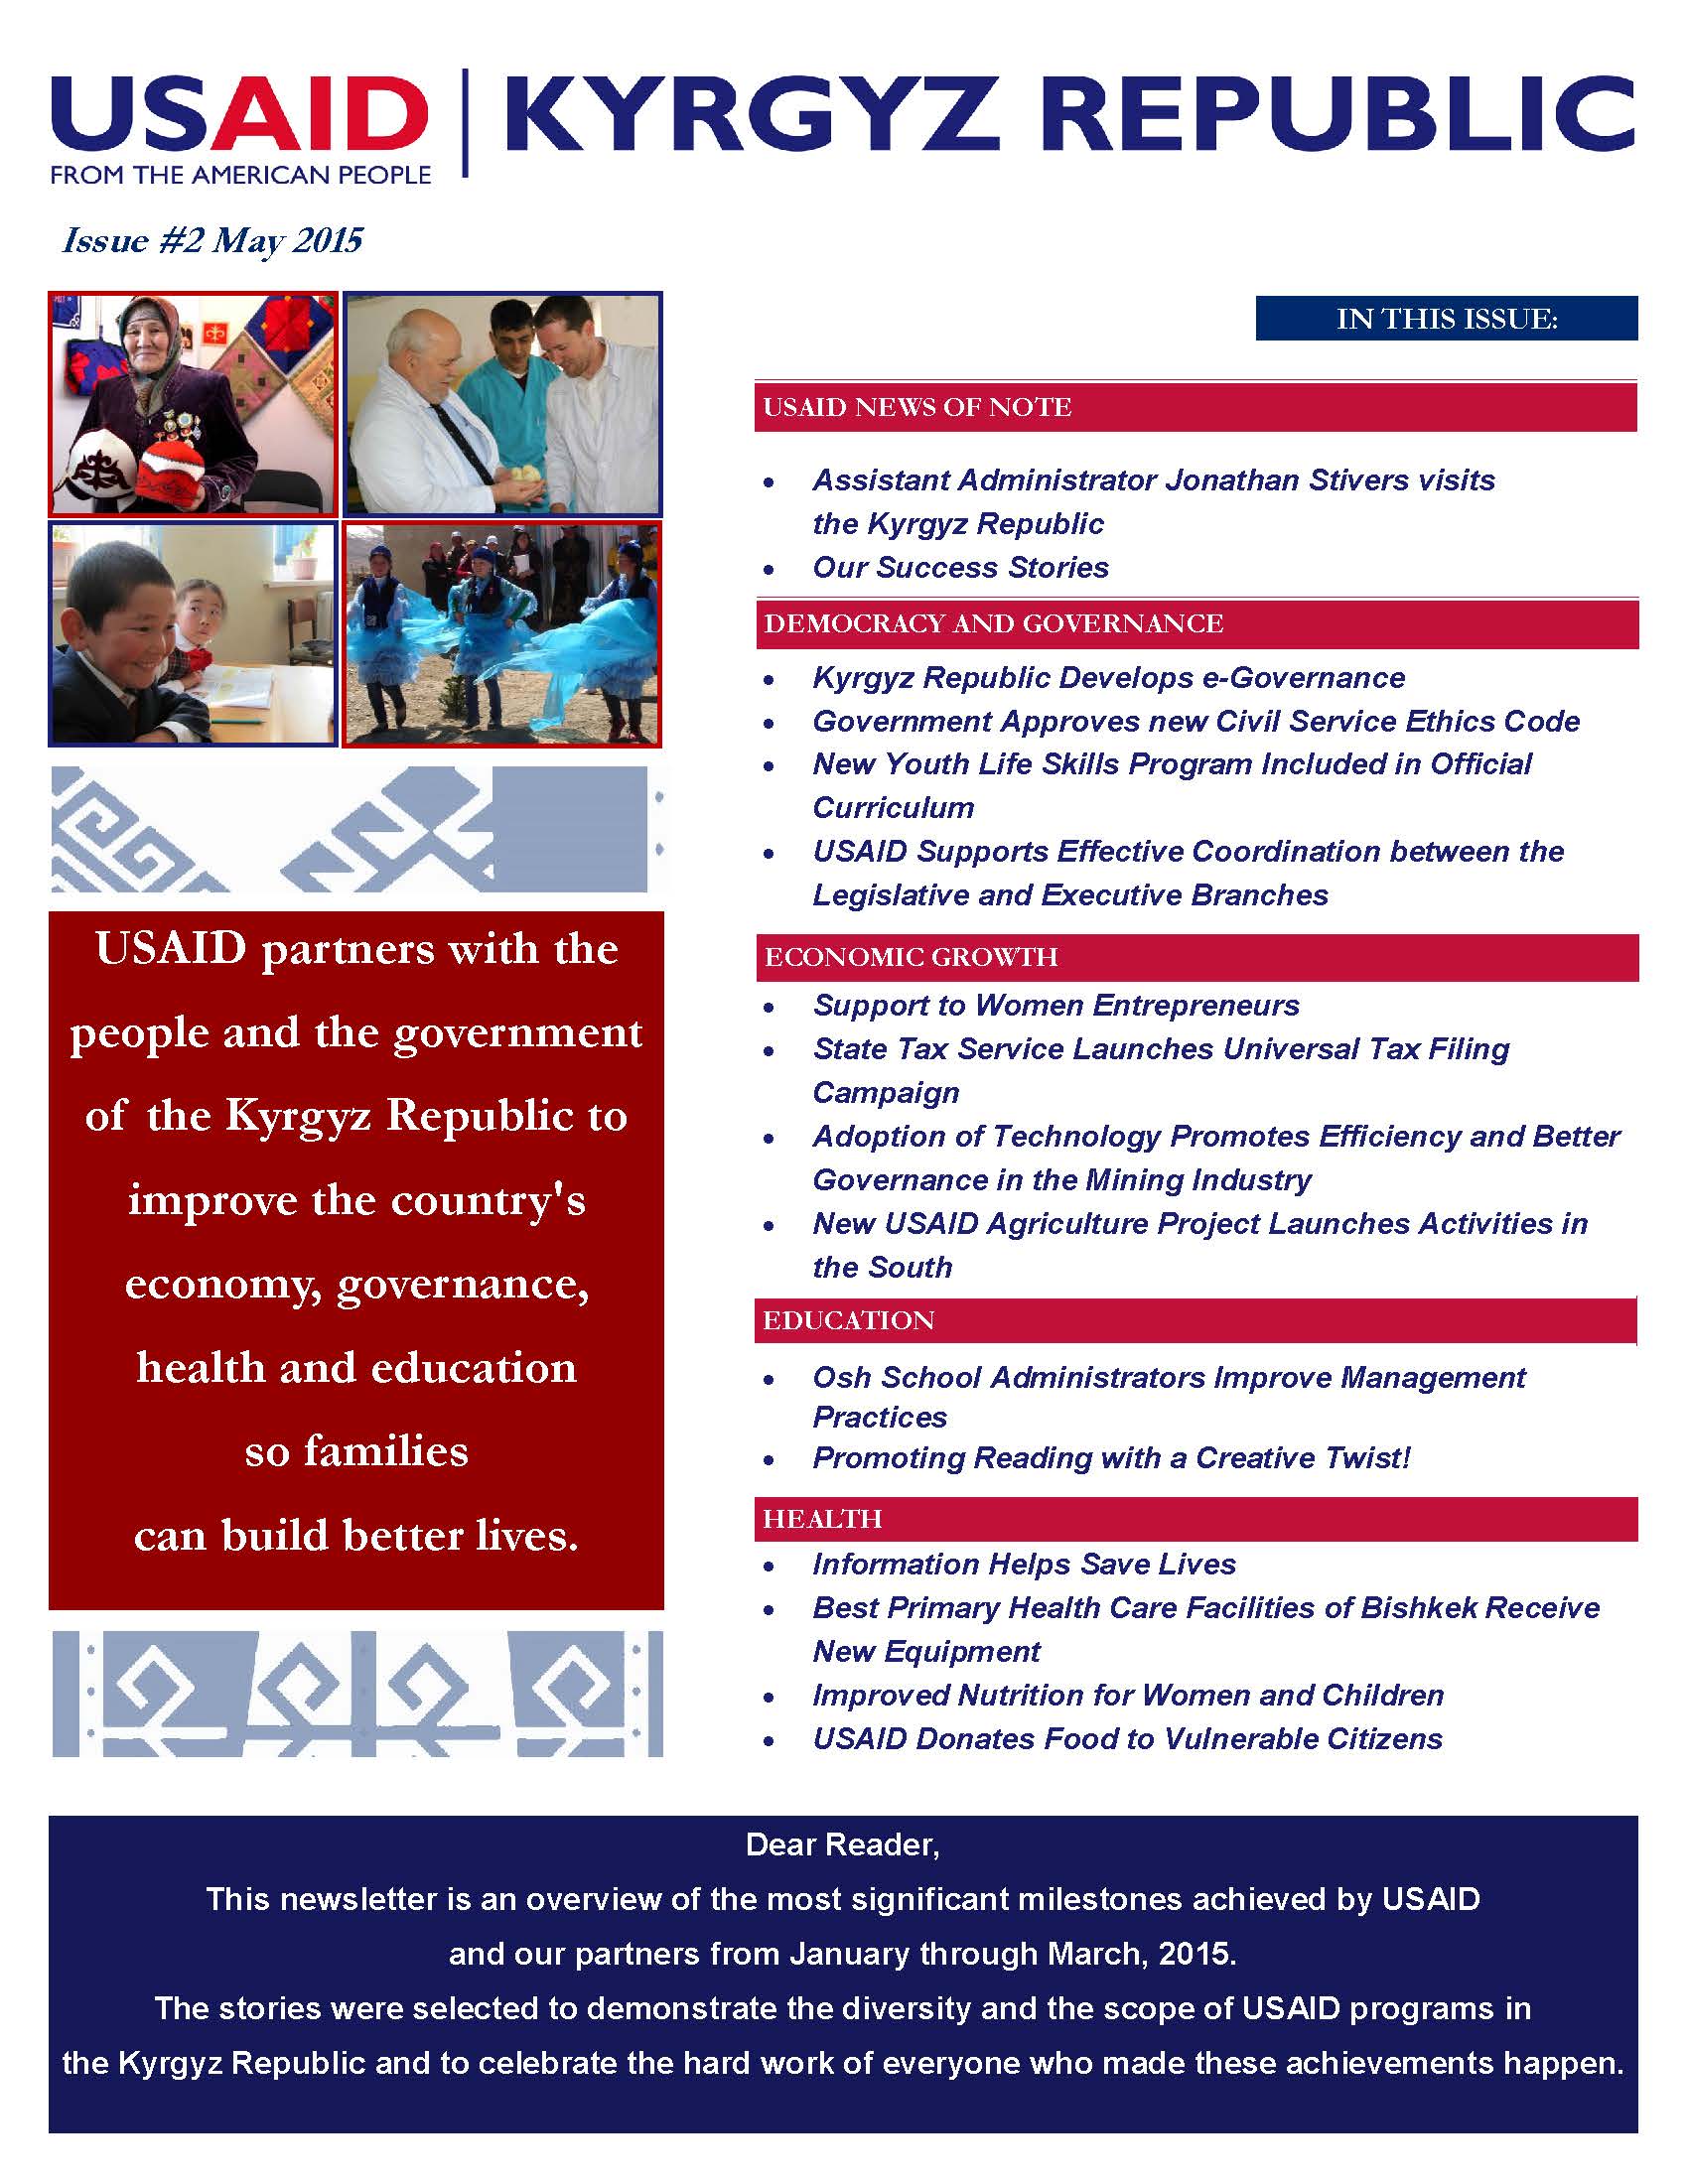 USAID Kyrgyz Republic Quarterly Newsletter, Issue 2